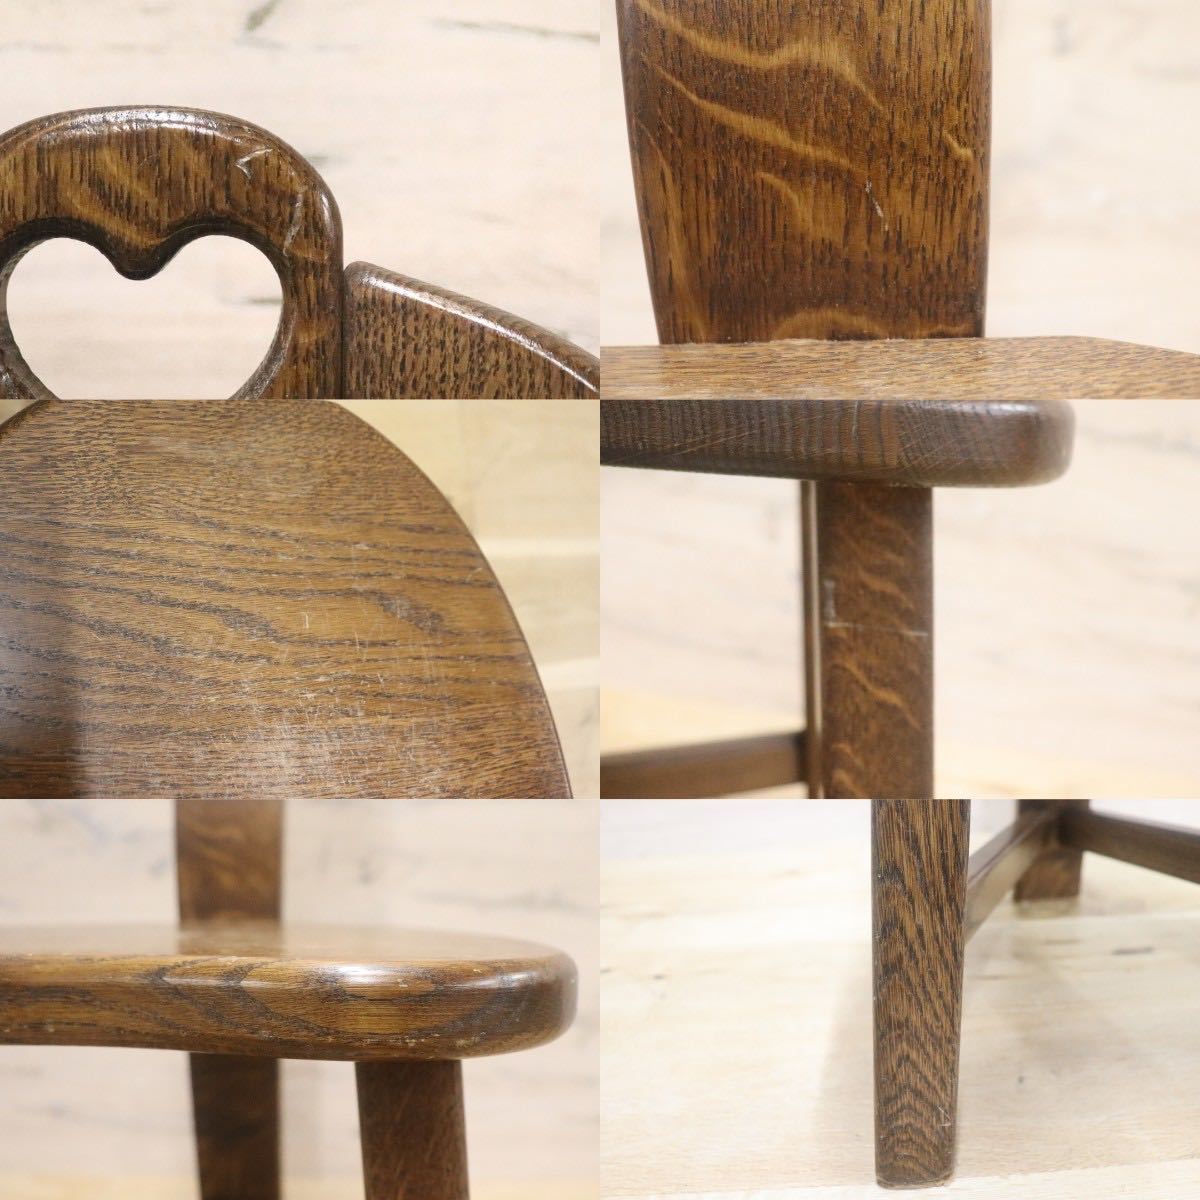 GMGT30○オランダ製 スモールチェア キッズチェア 椅子 飾り椅子 木製椅子-